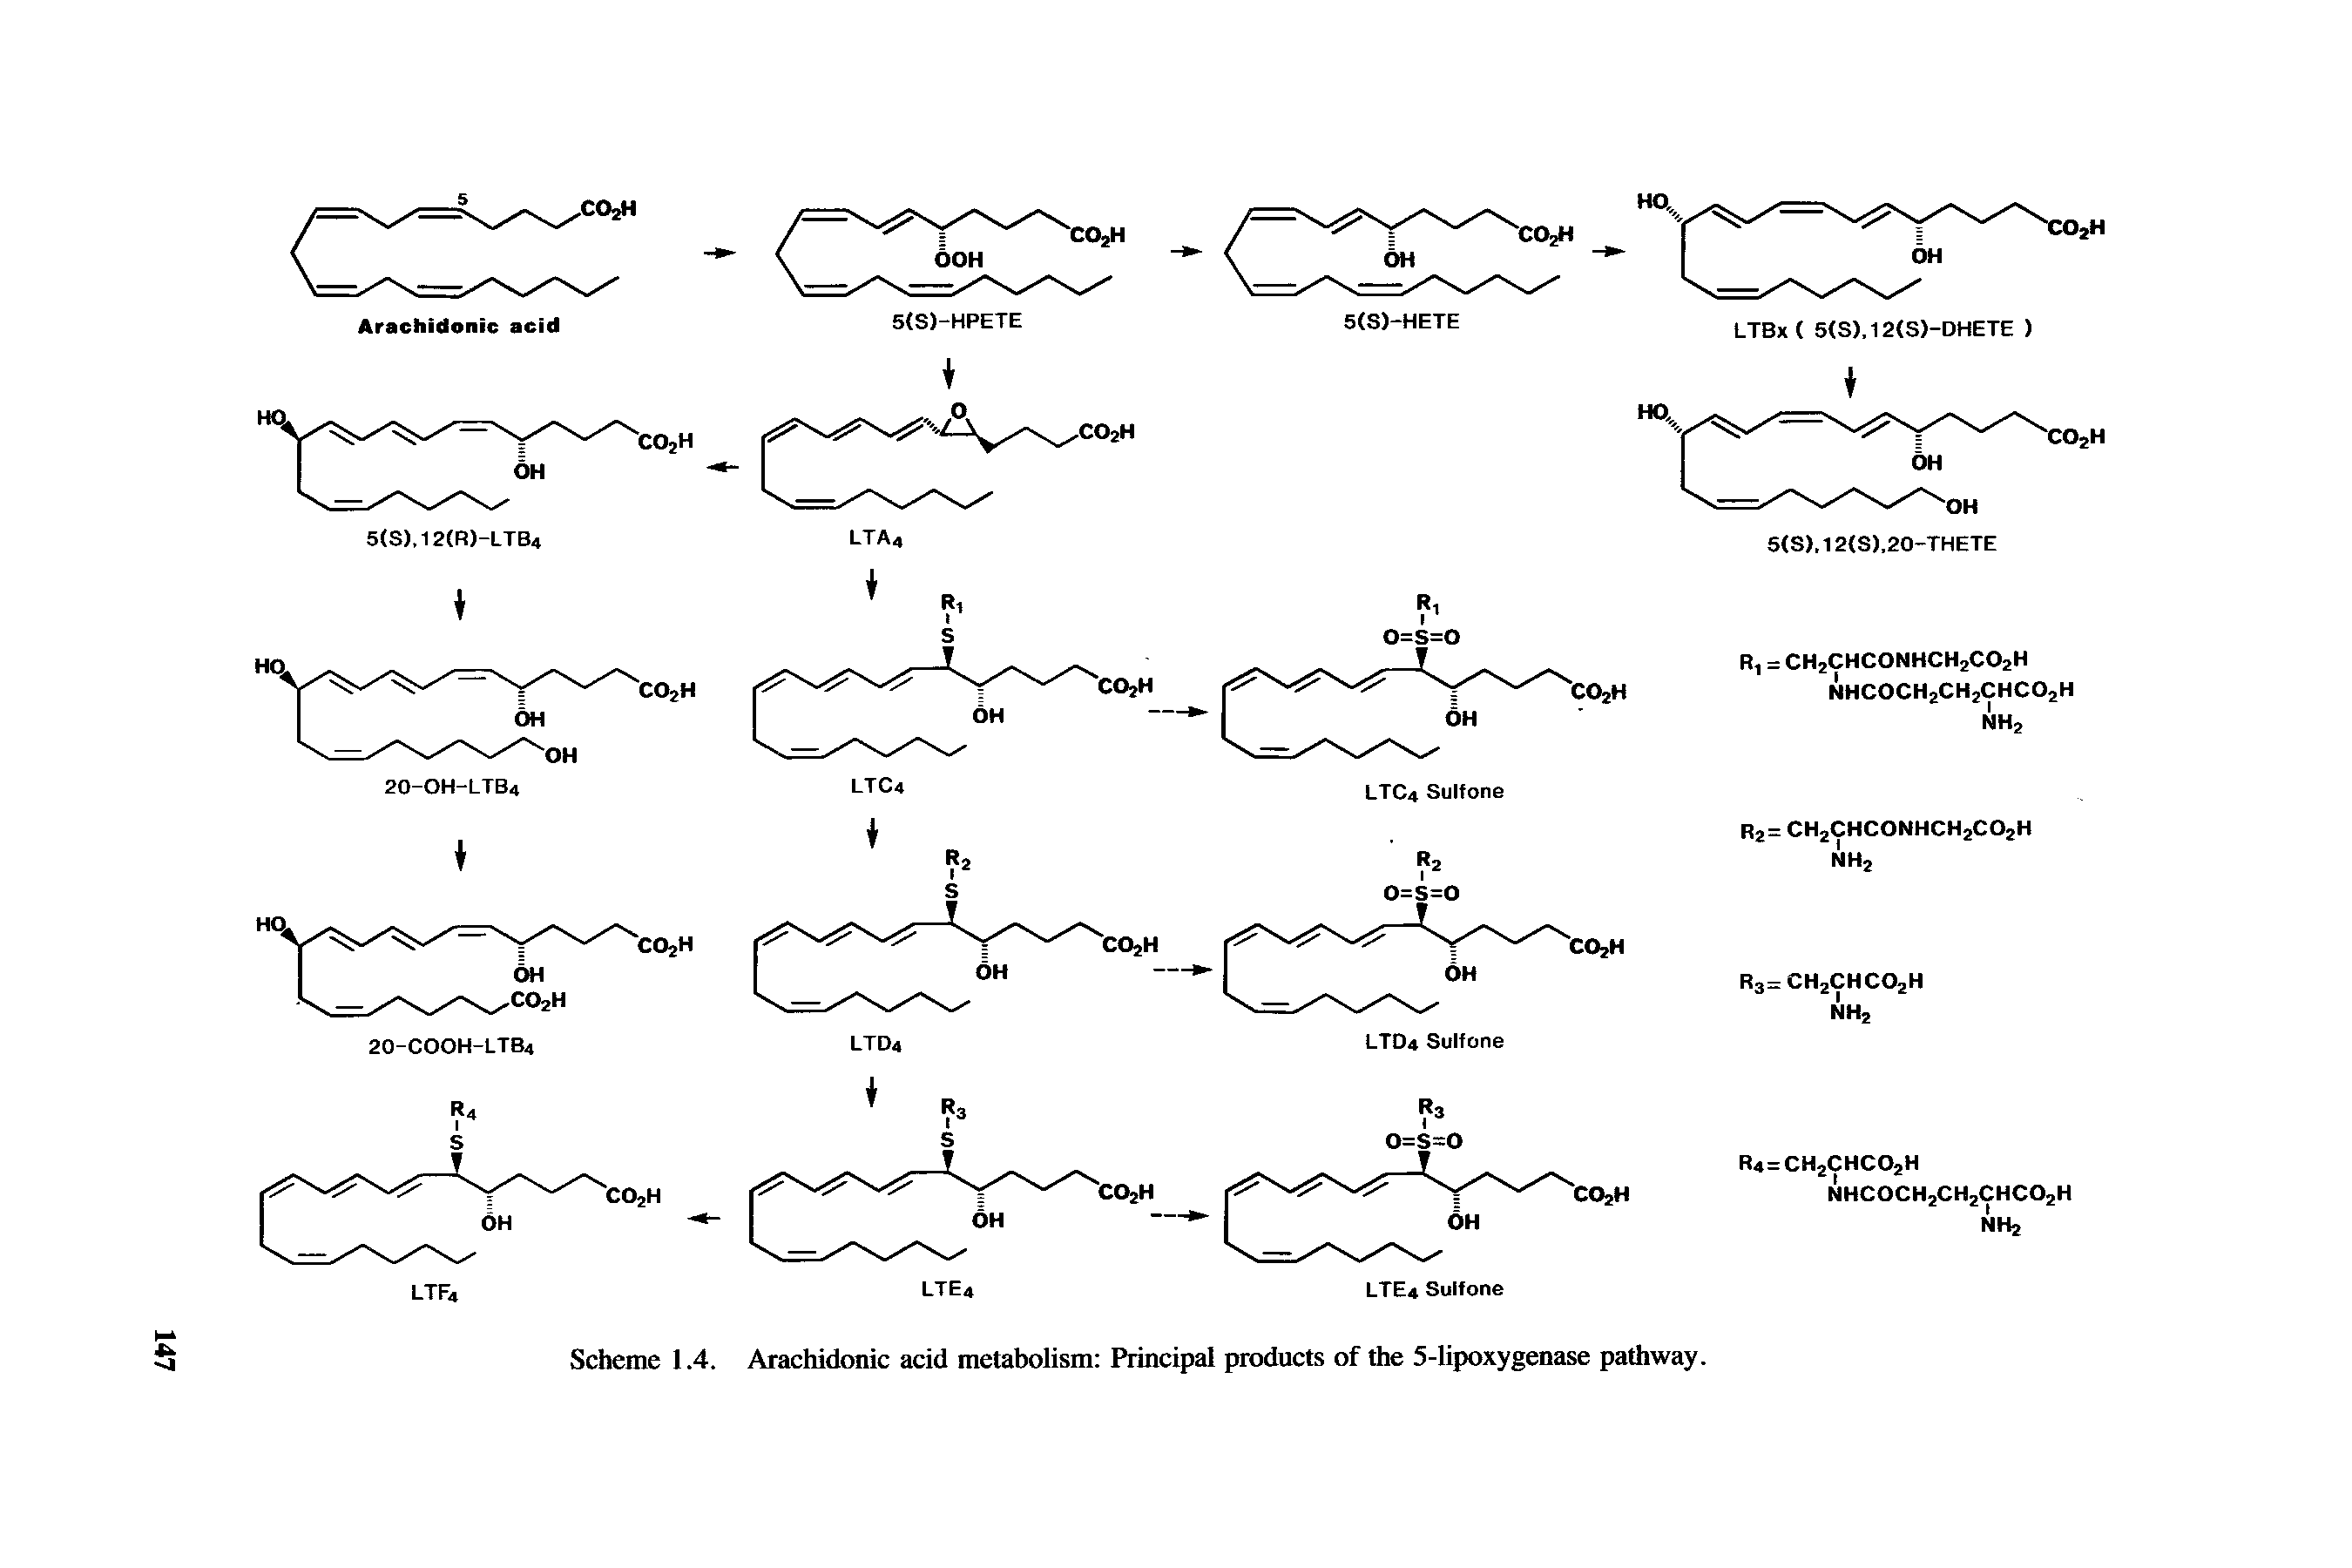 Scheme 1.4. Arachidonic acid metabolism Principal products of the 5-lipoxygenase pathway.